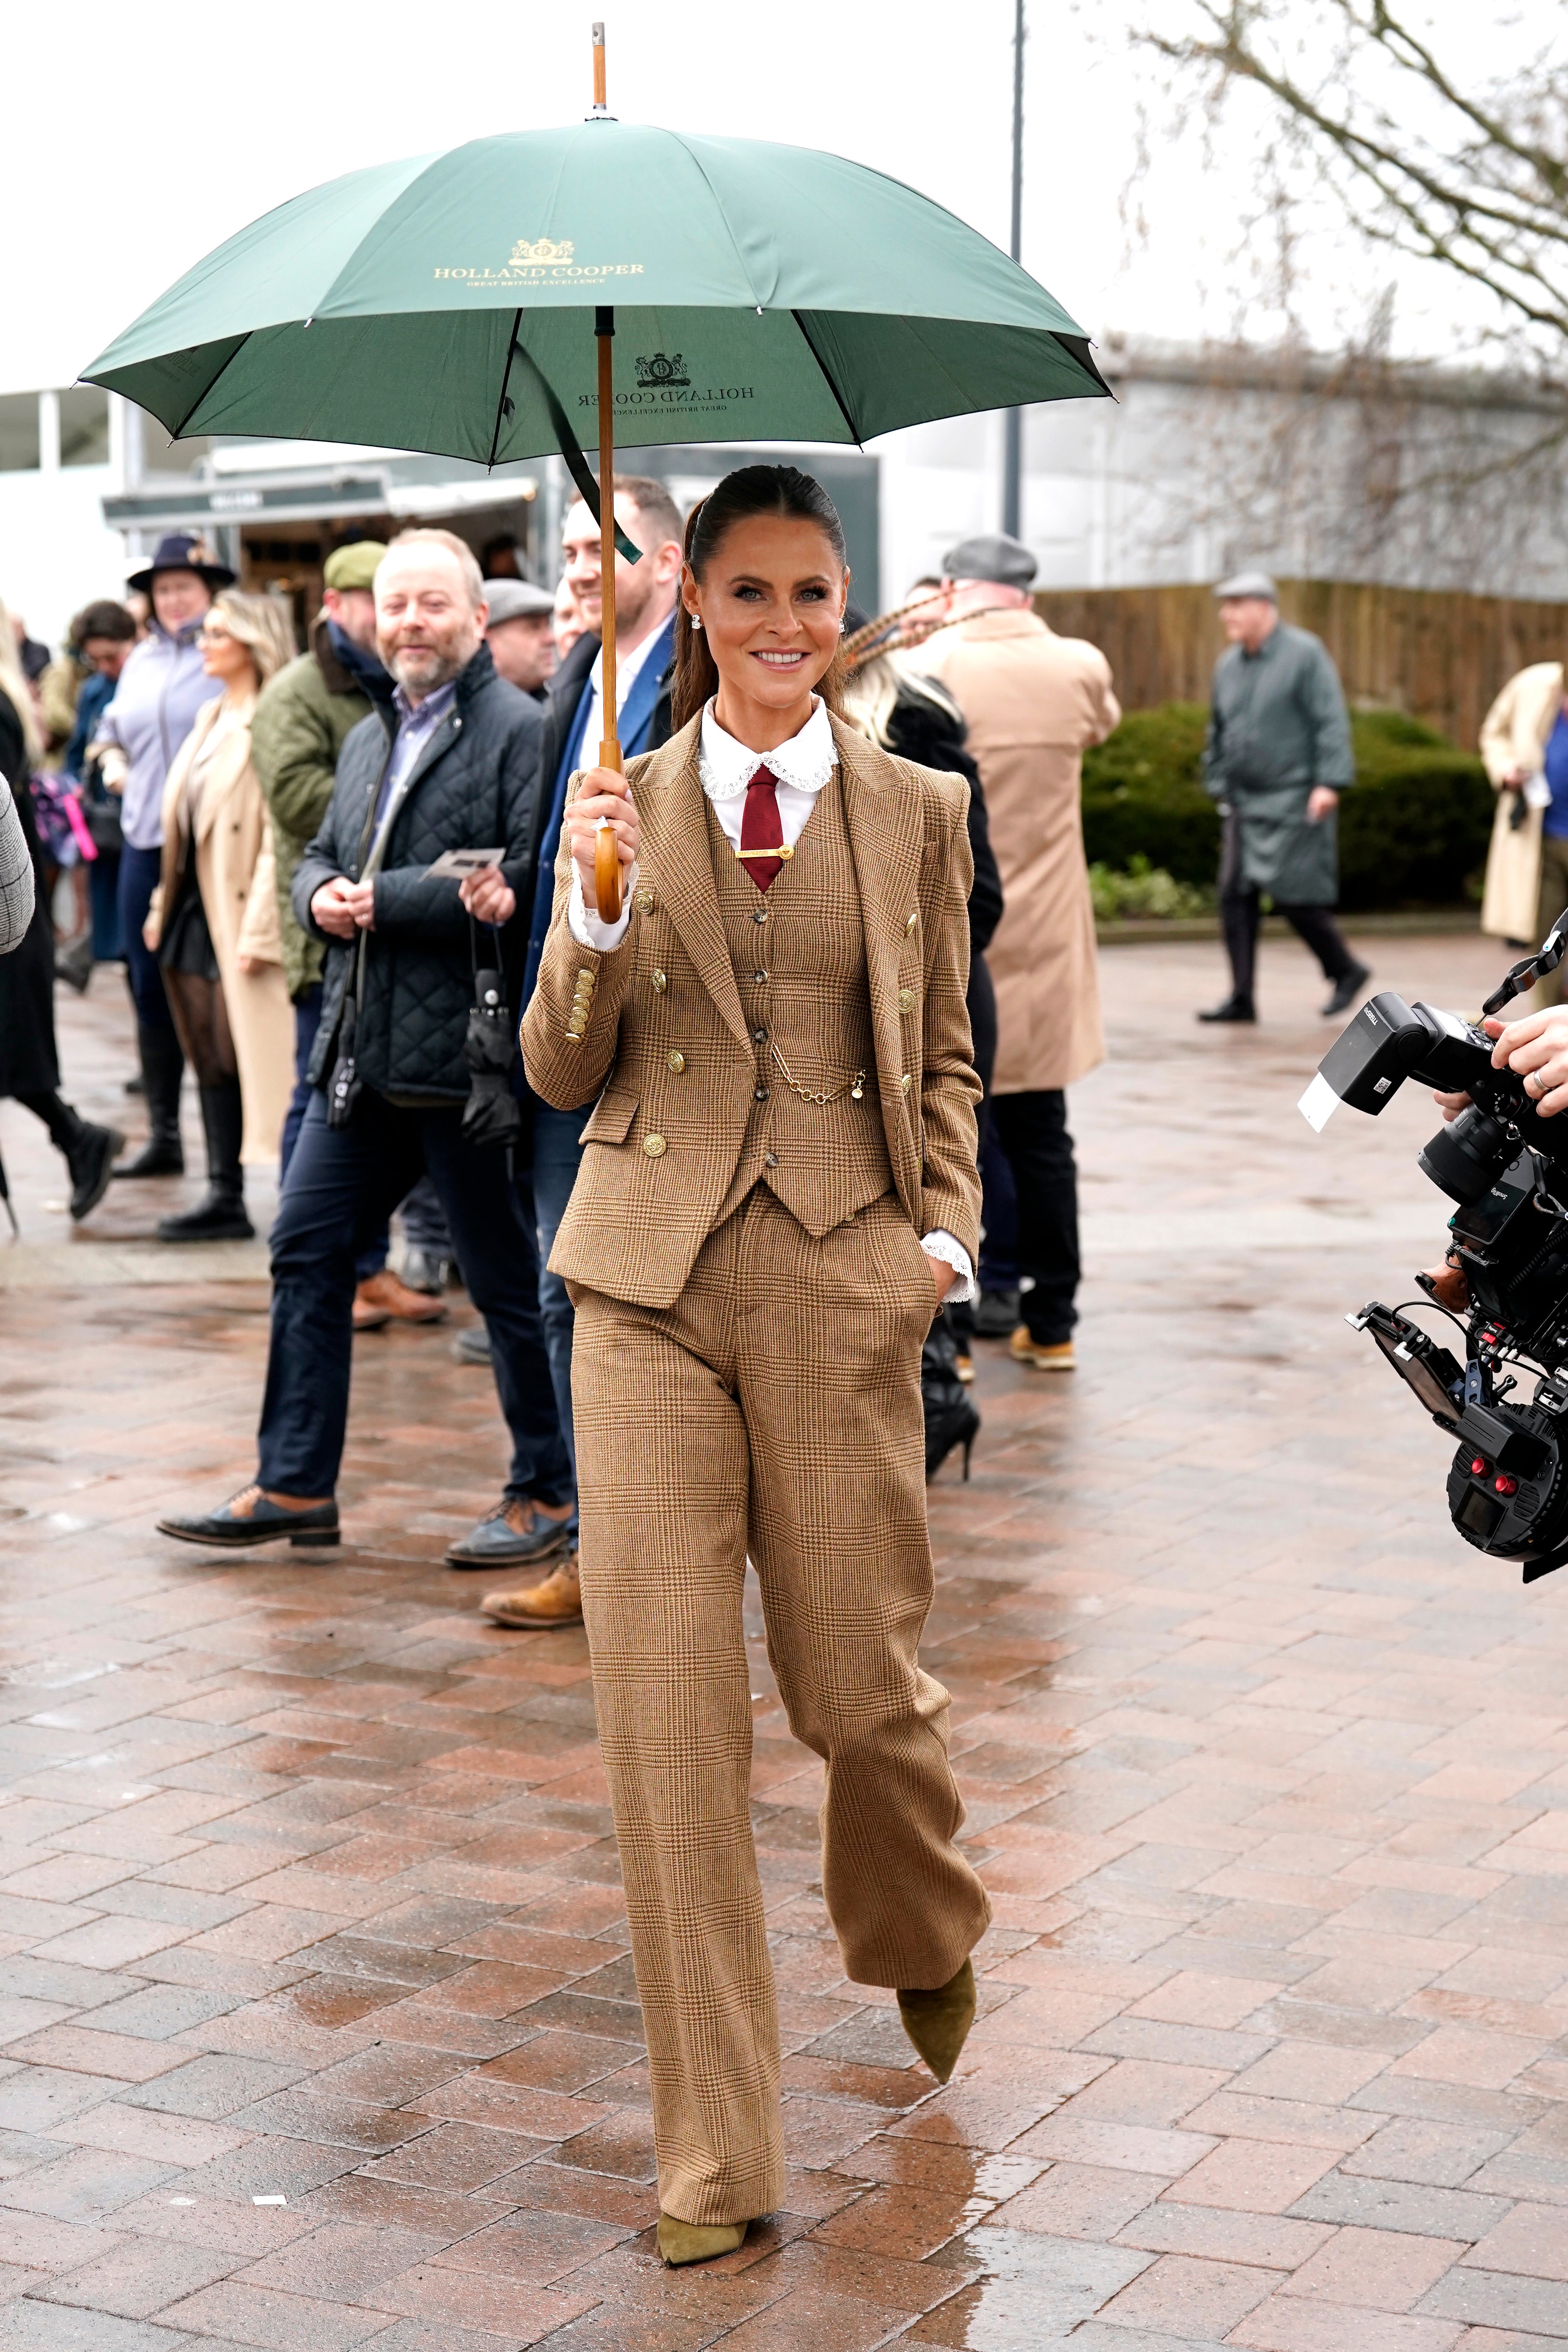 Fashion-forward: designer Jade Holland Cooper wears an eye-catching trouser suit